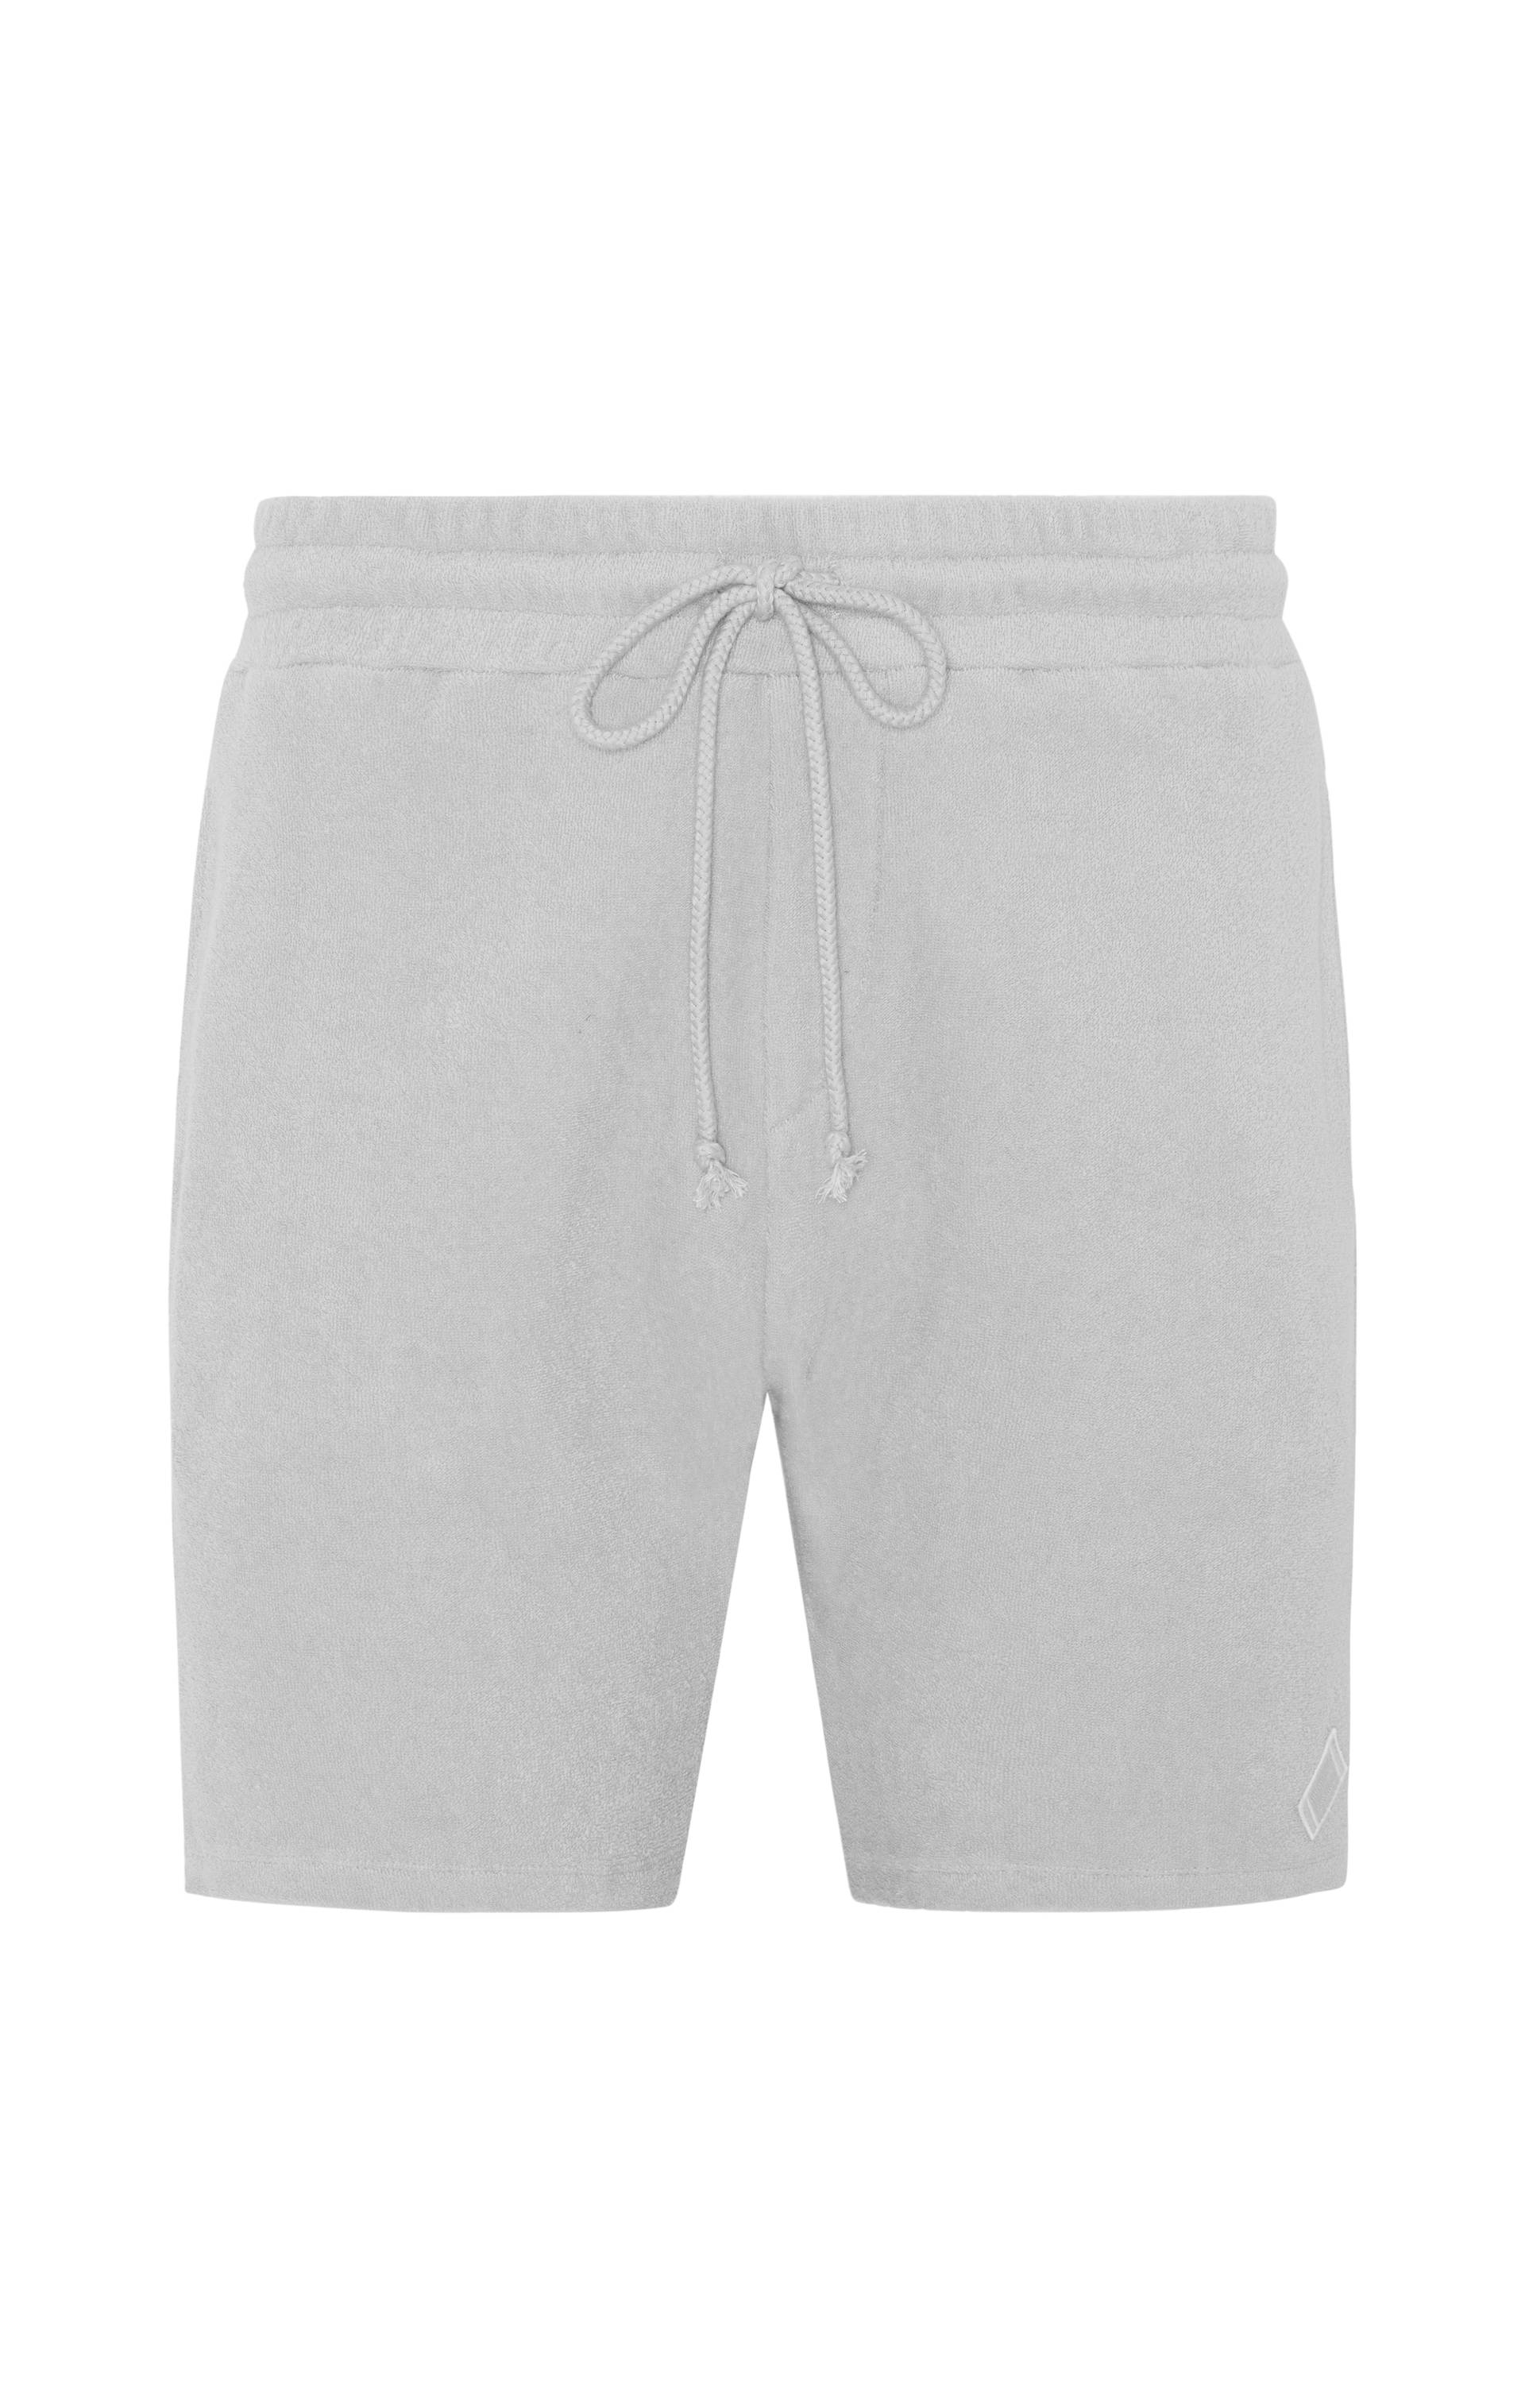 Onepiece Towel Club Shorts Light Grey - 1